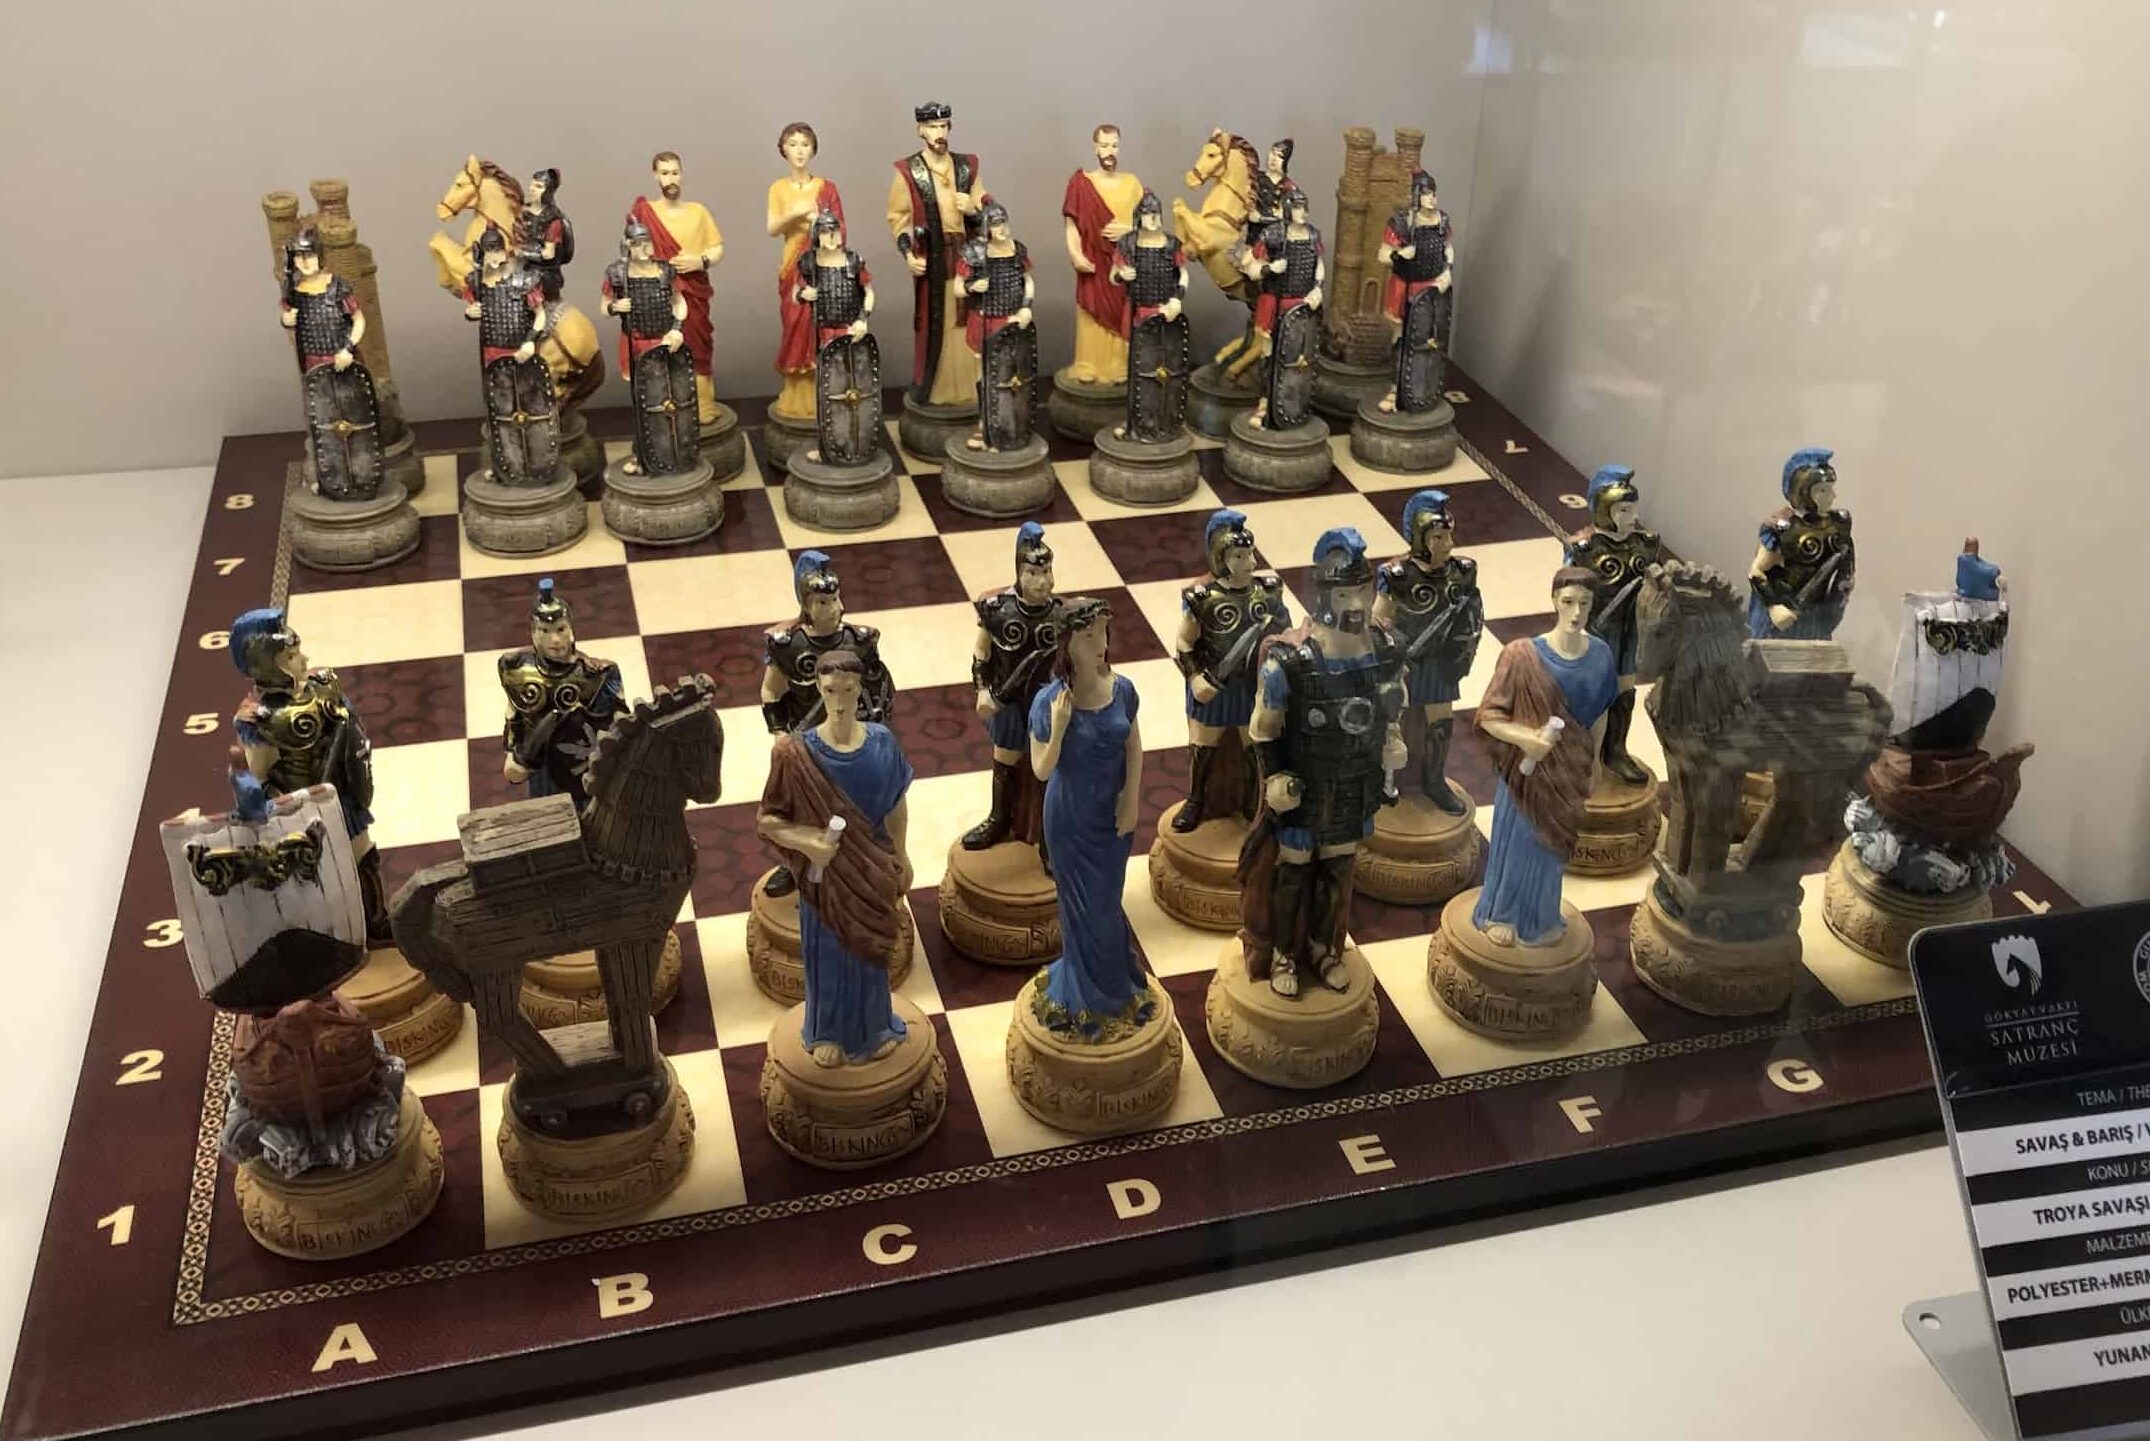 Trojan War chess set (Greece) at the Gökyay Foundation Chess Museum in Ankara, Turkey